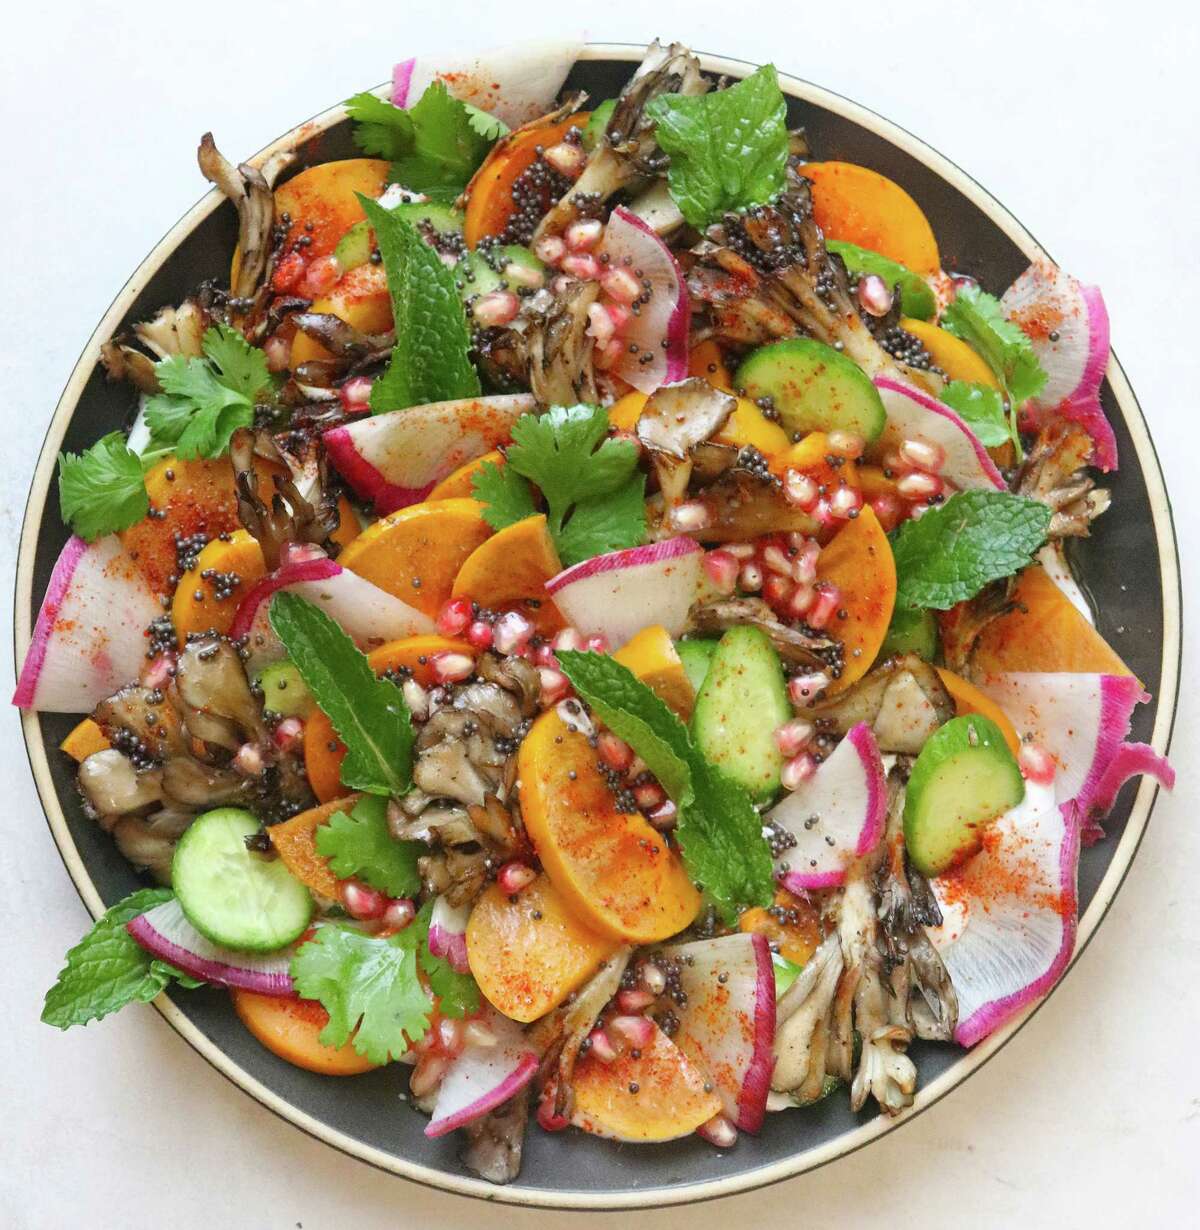 Persimmon salad from chef Anita Jaisinghani